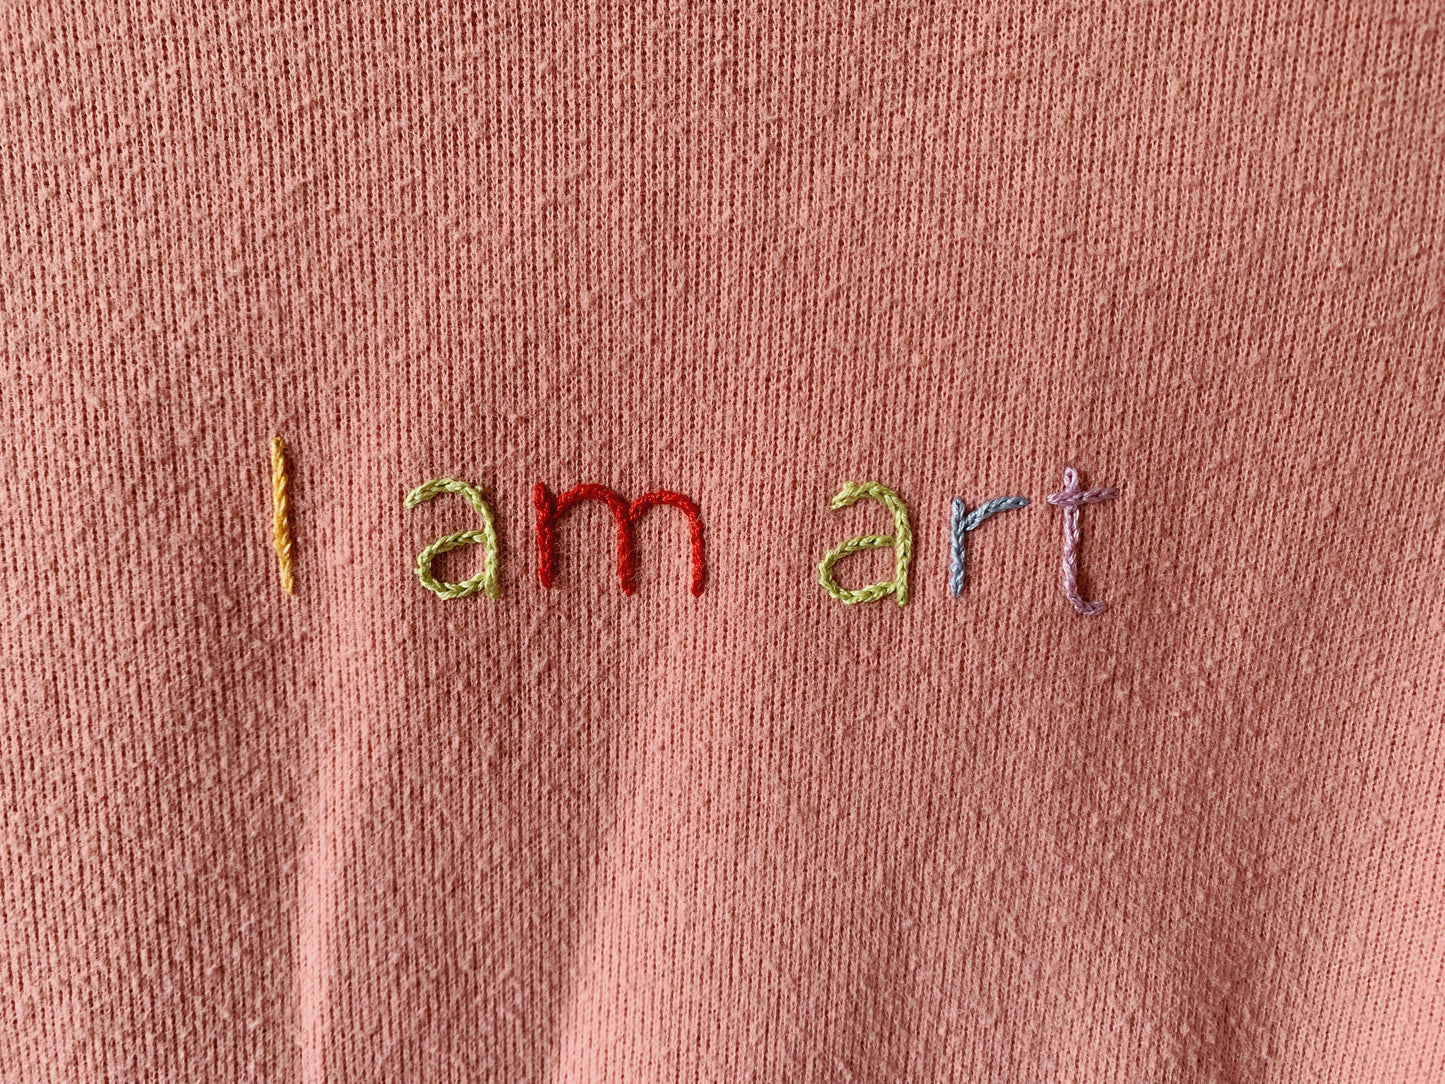 I AM ART Thrifted Sweater